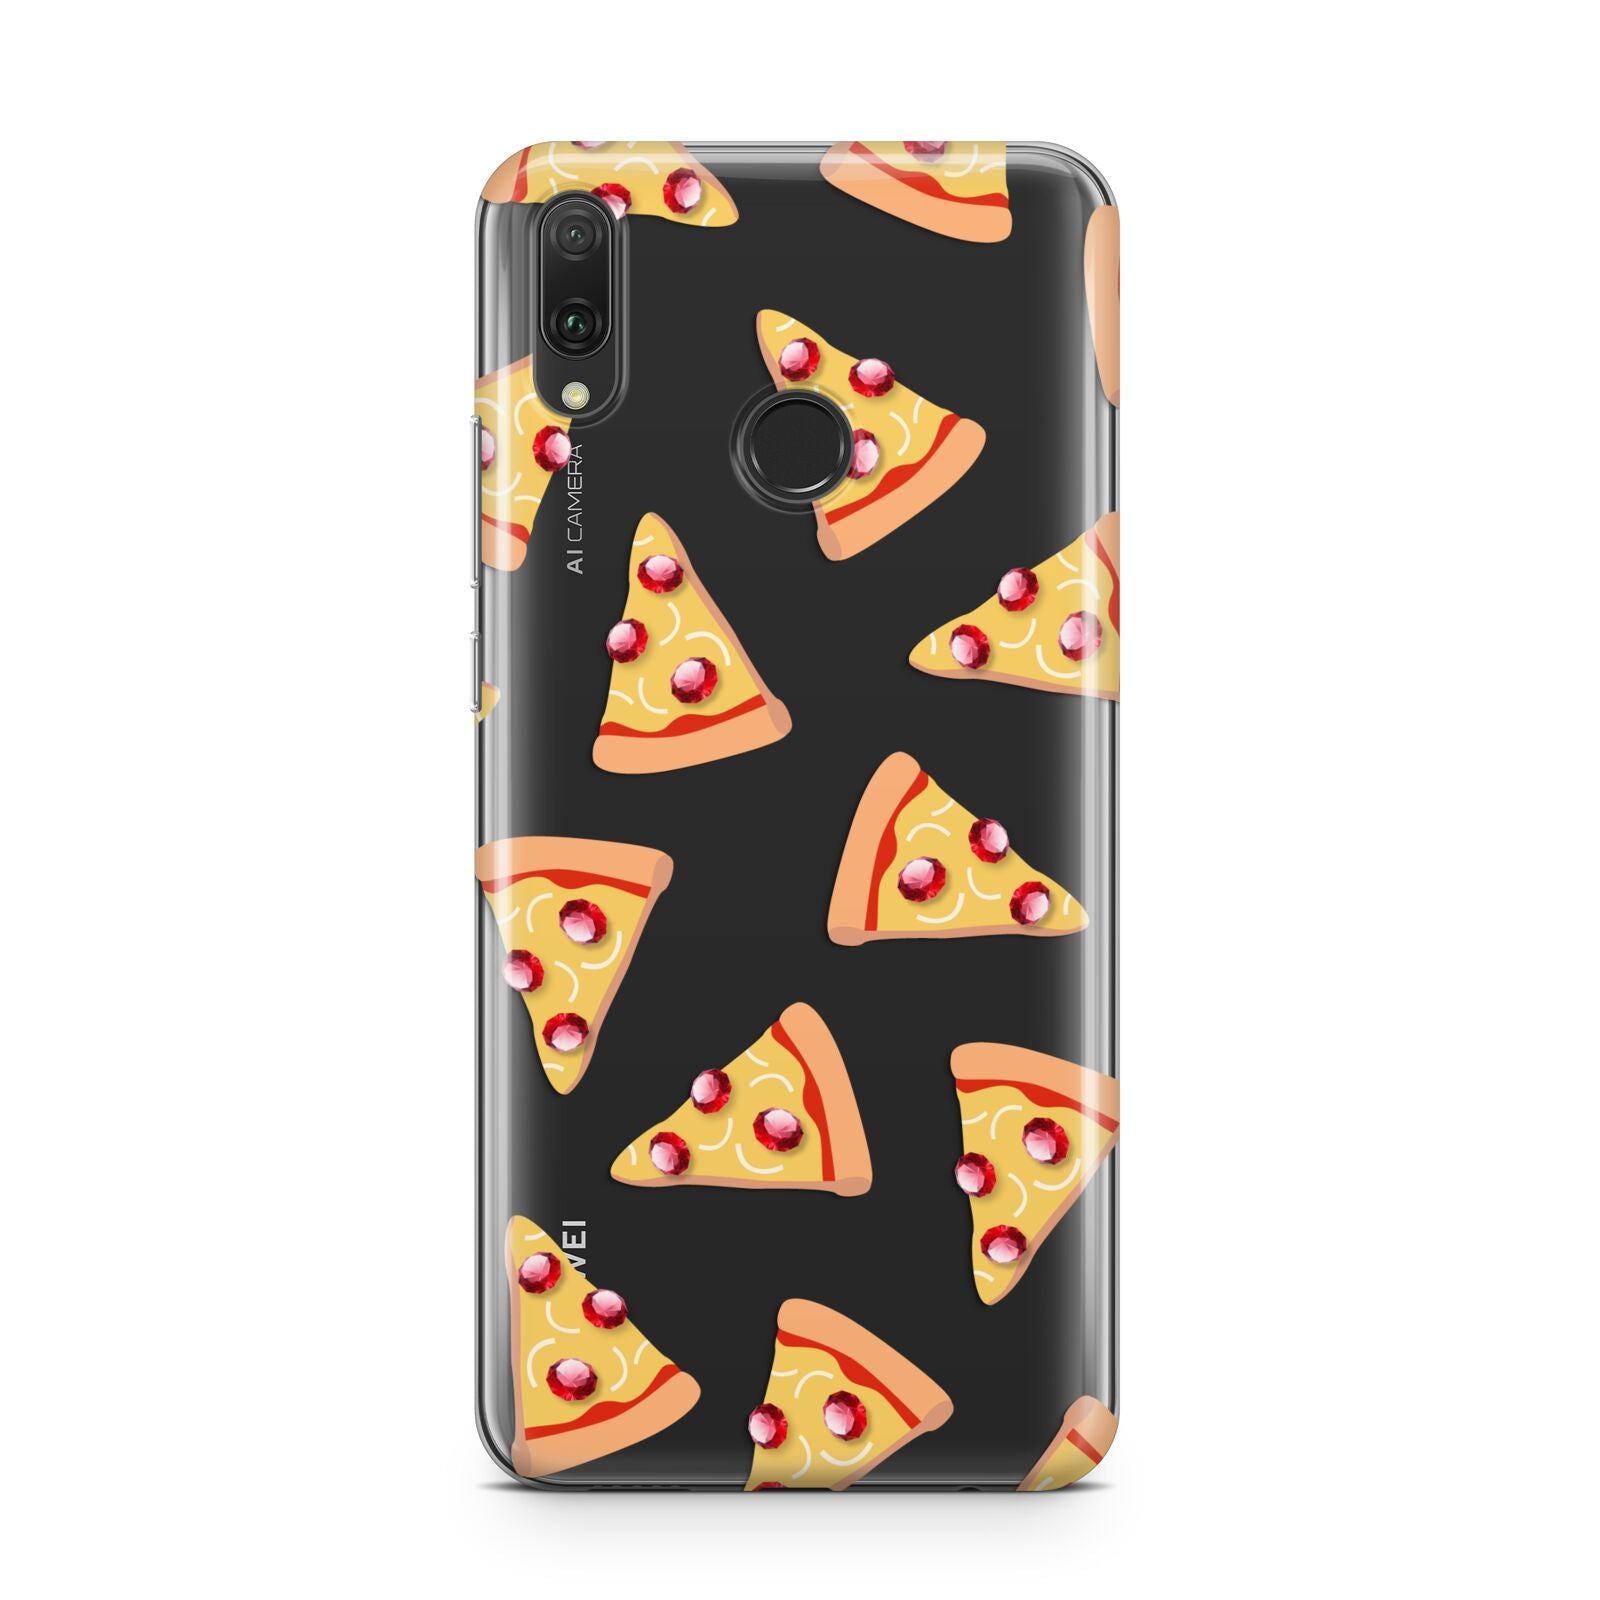 Rubies on Cartoon Pizza Slices Huawei Y9 2019